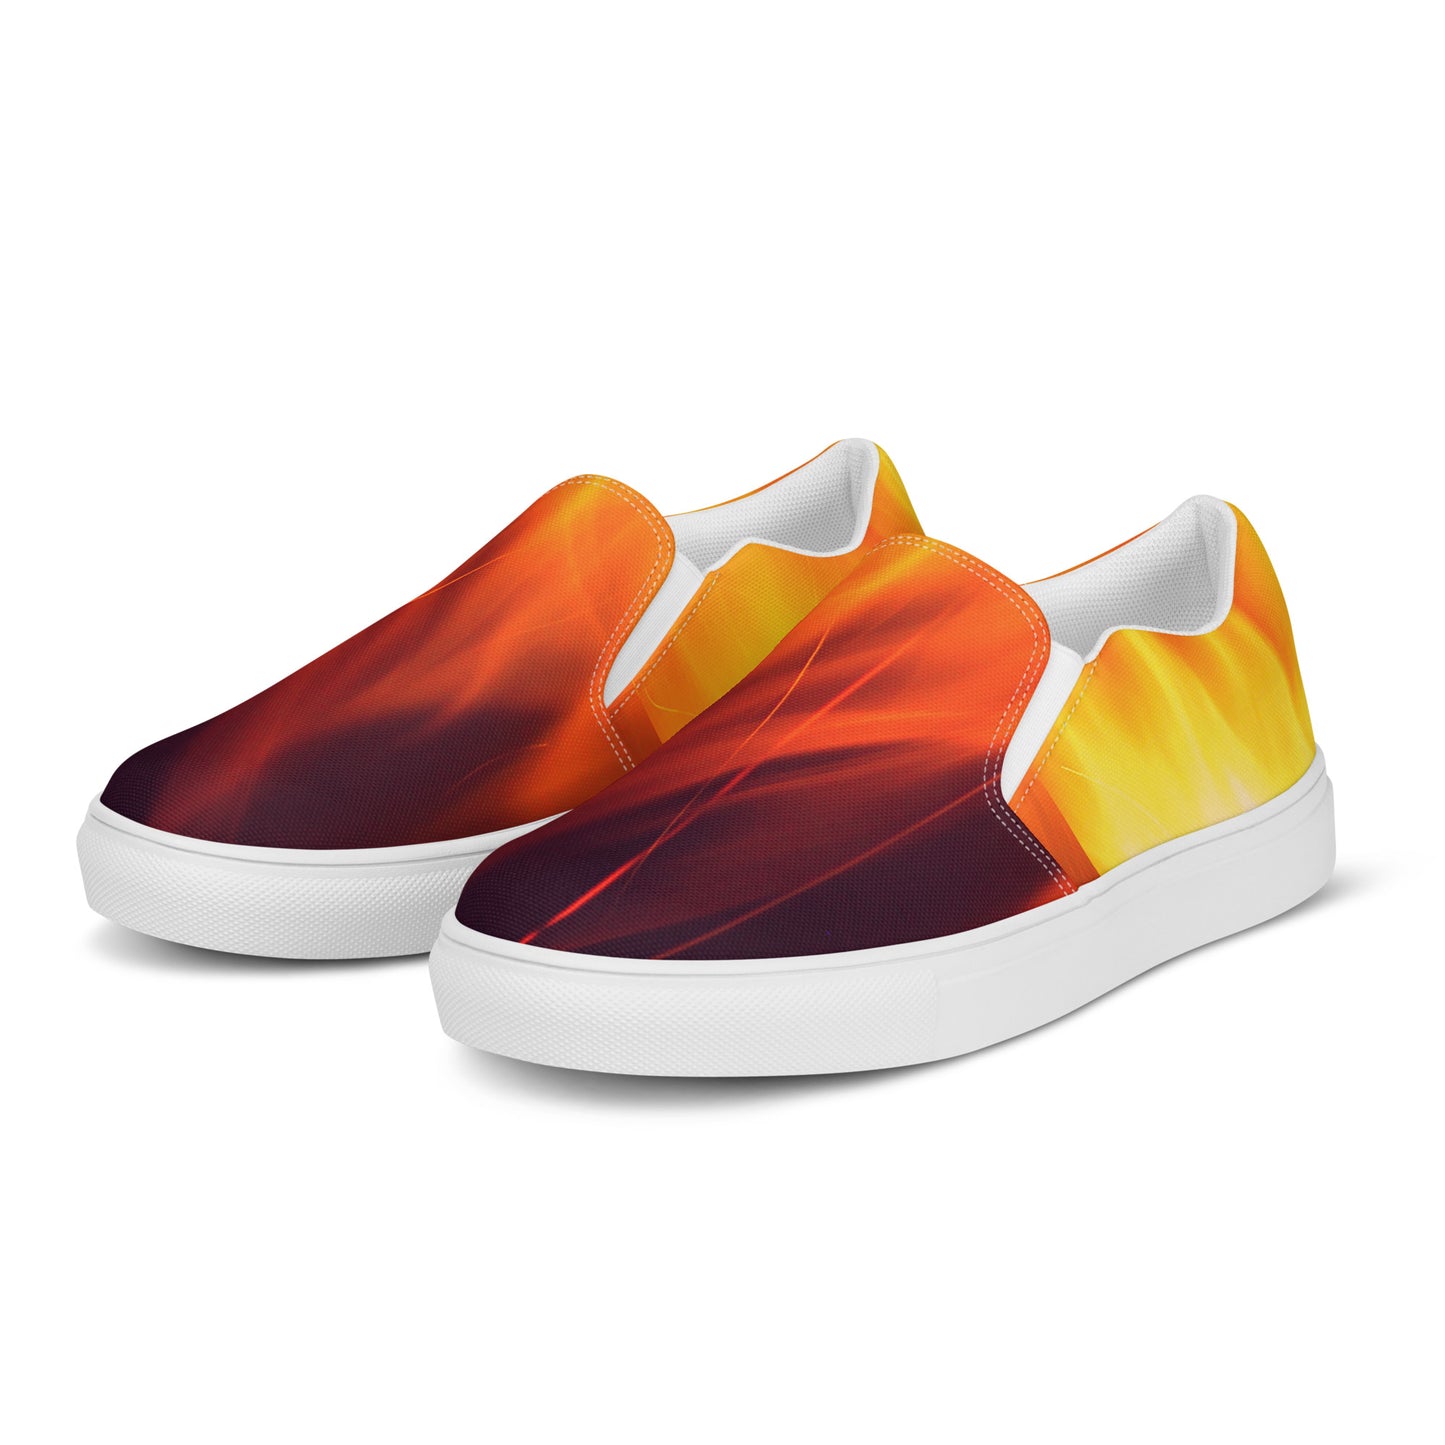 Artist on Fire Women’s Slip-On Canvas Shoes